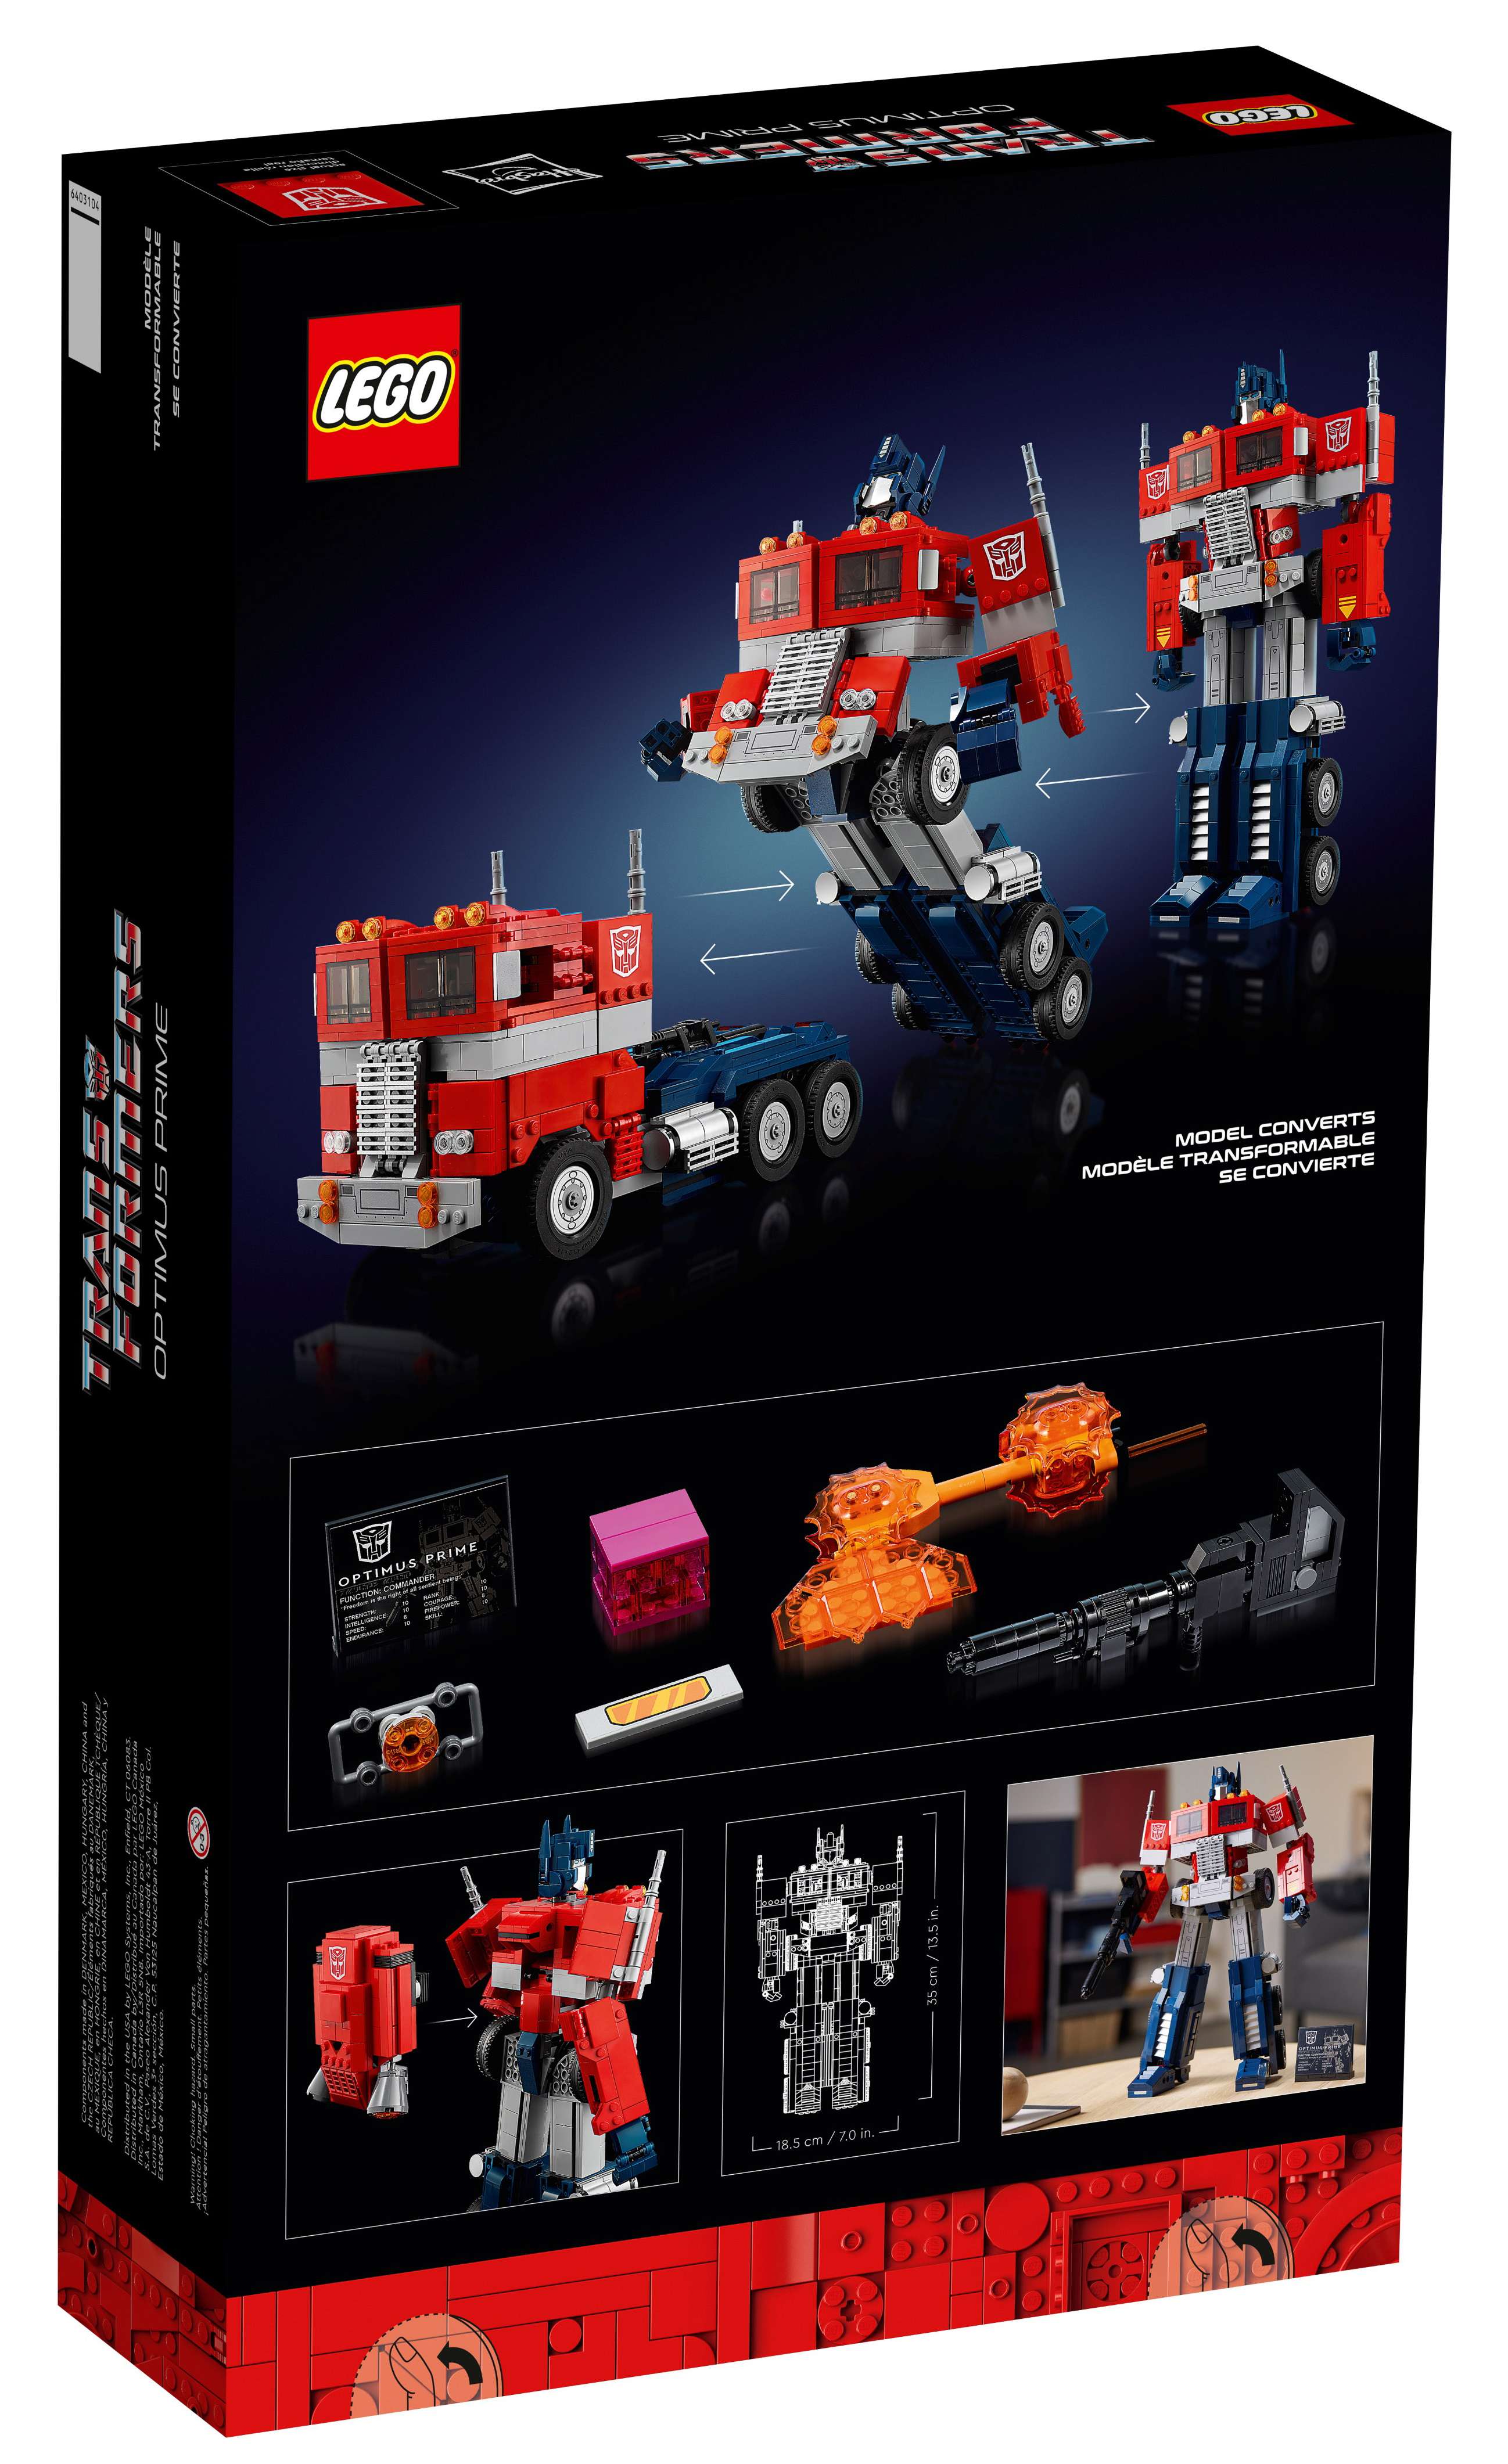 Lego-Transformers-Optimus-Prime-box-rear